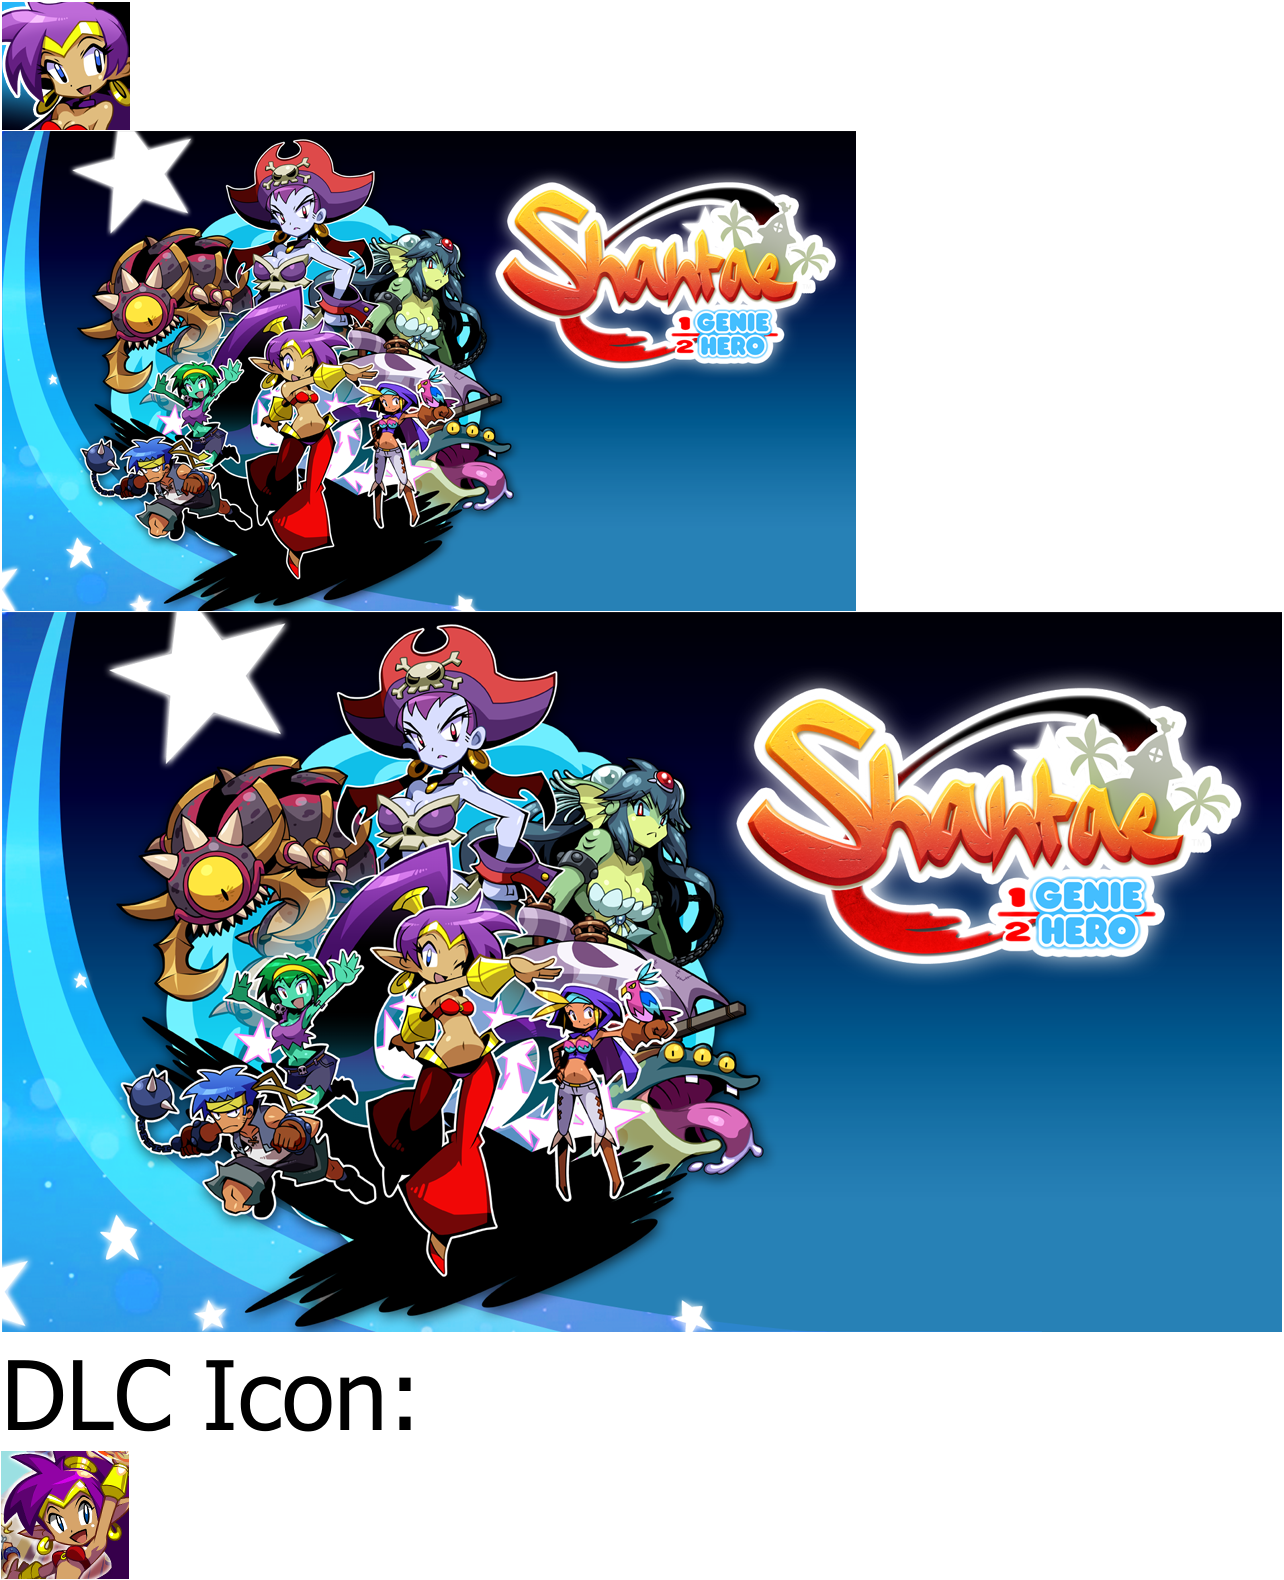 Shantae: Half-Genie Hero - HOME Menu Icon and Banners